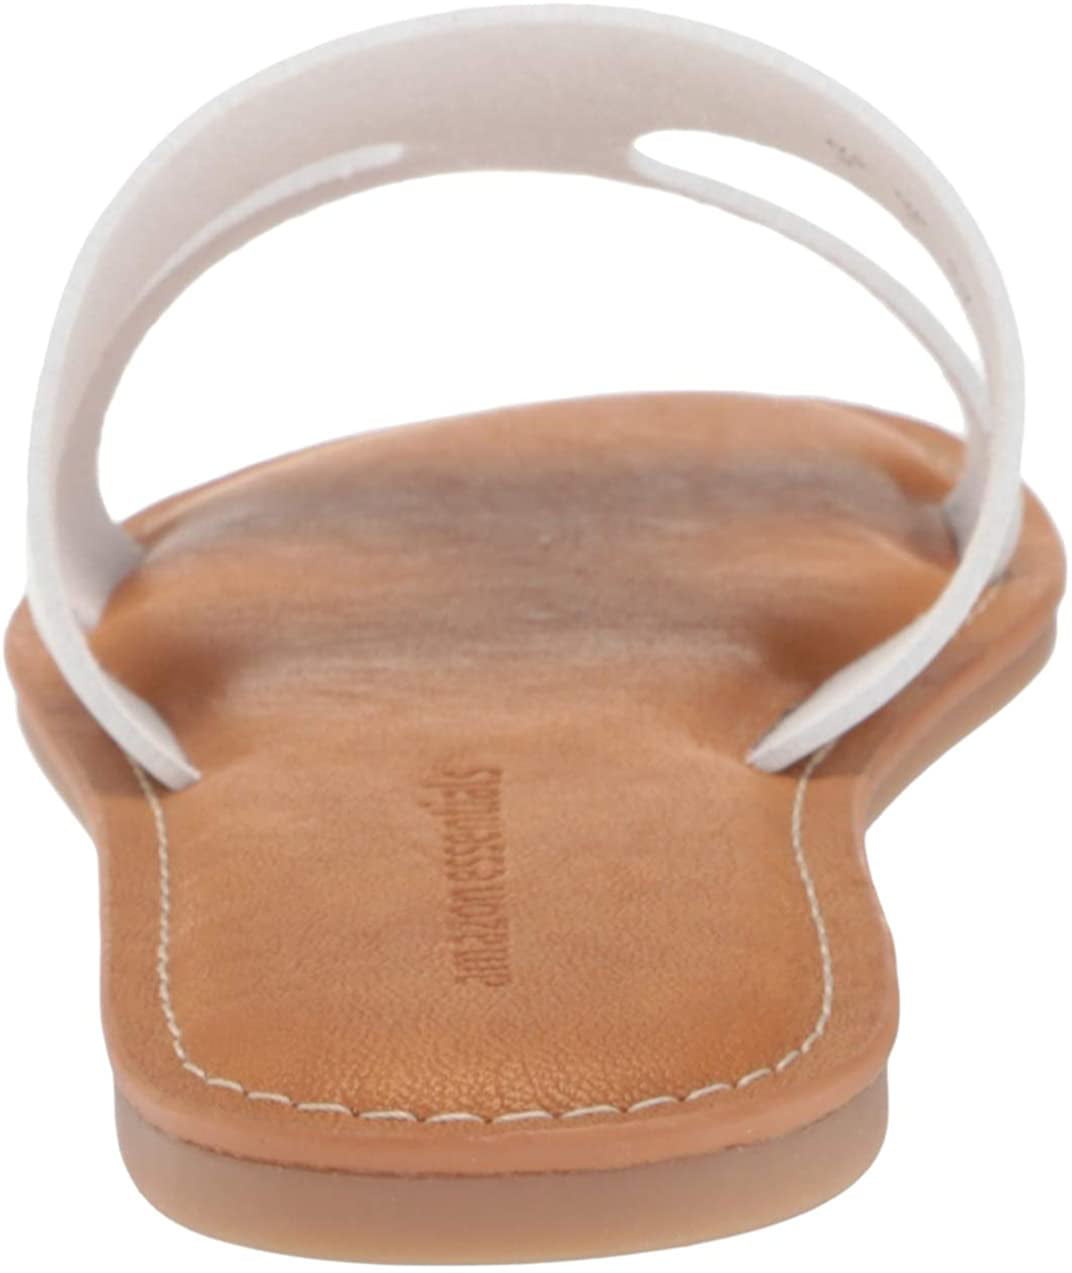 Essentials H Band Flat Sandal Women's Sandal